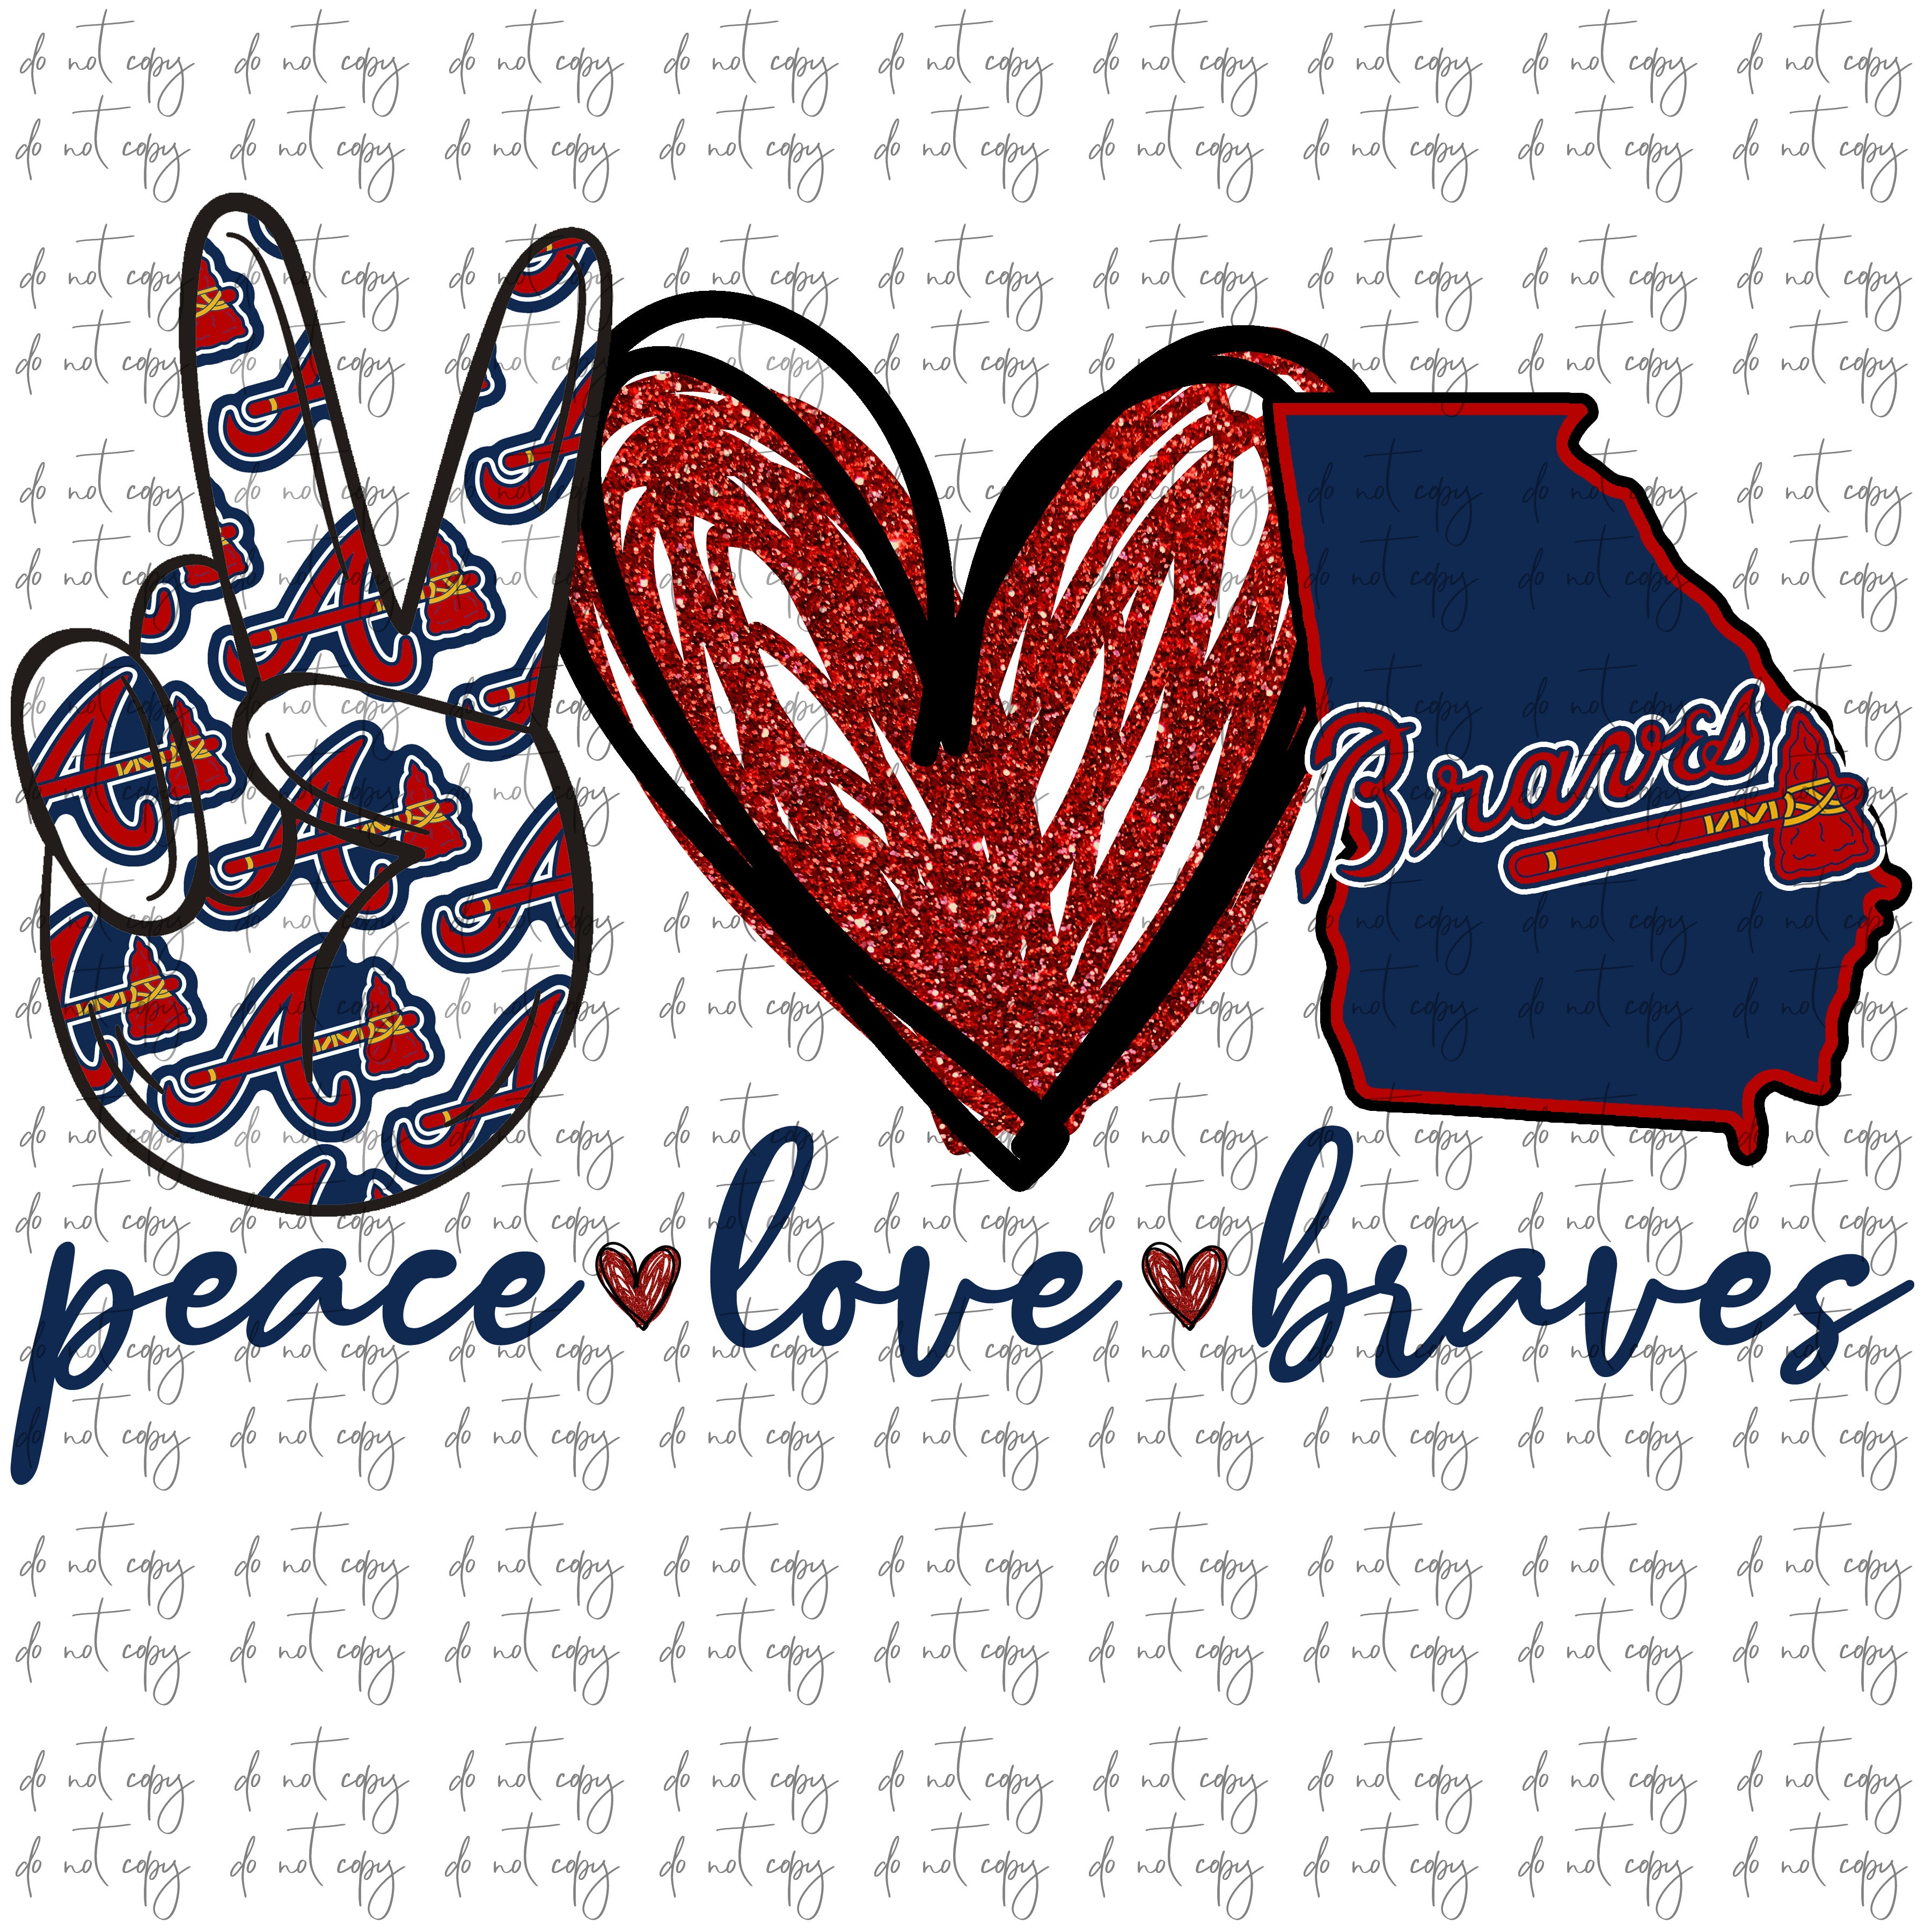 Official snoopy Atlanta Braves Peace Love Braves Shirt, hoodie